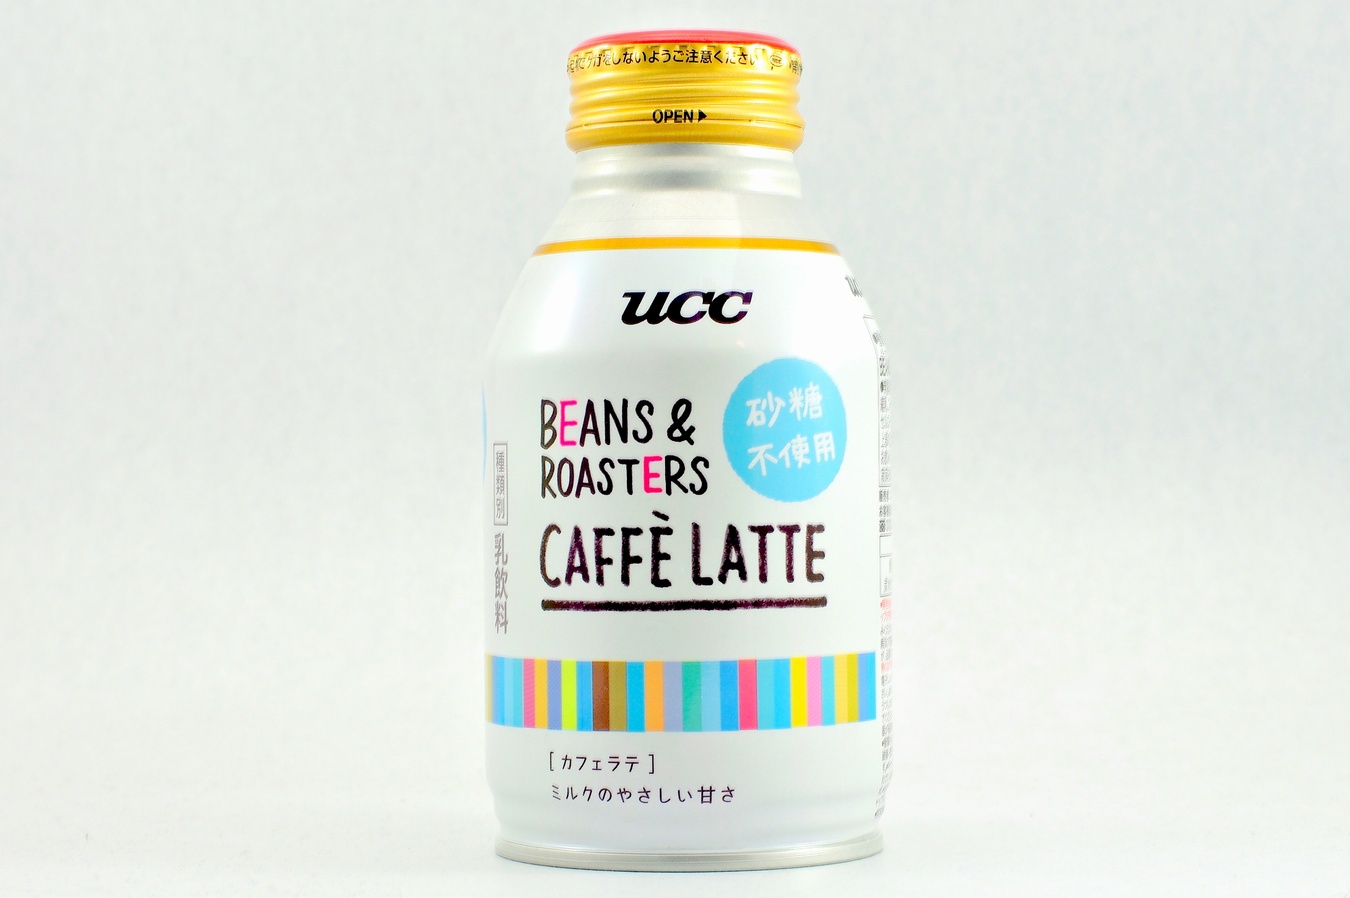 UCC BEANS & ROASTERS CAFFÈ LATTE 砂糖不使用 2015年4月